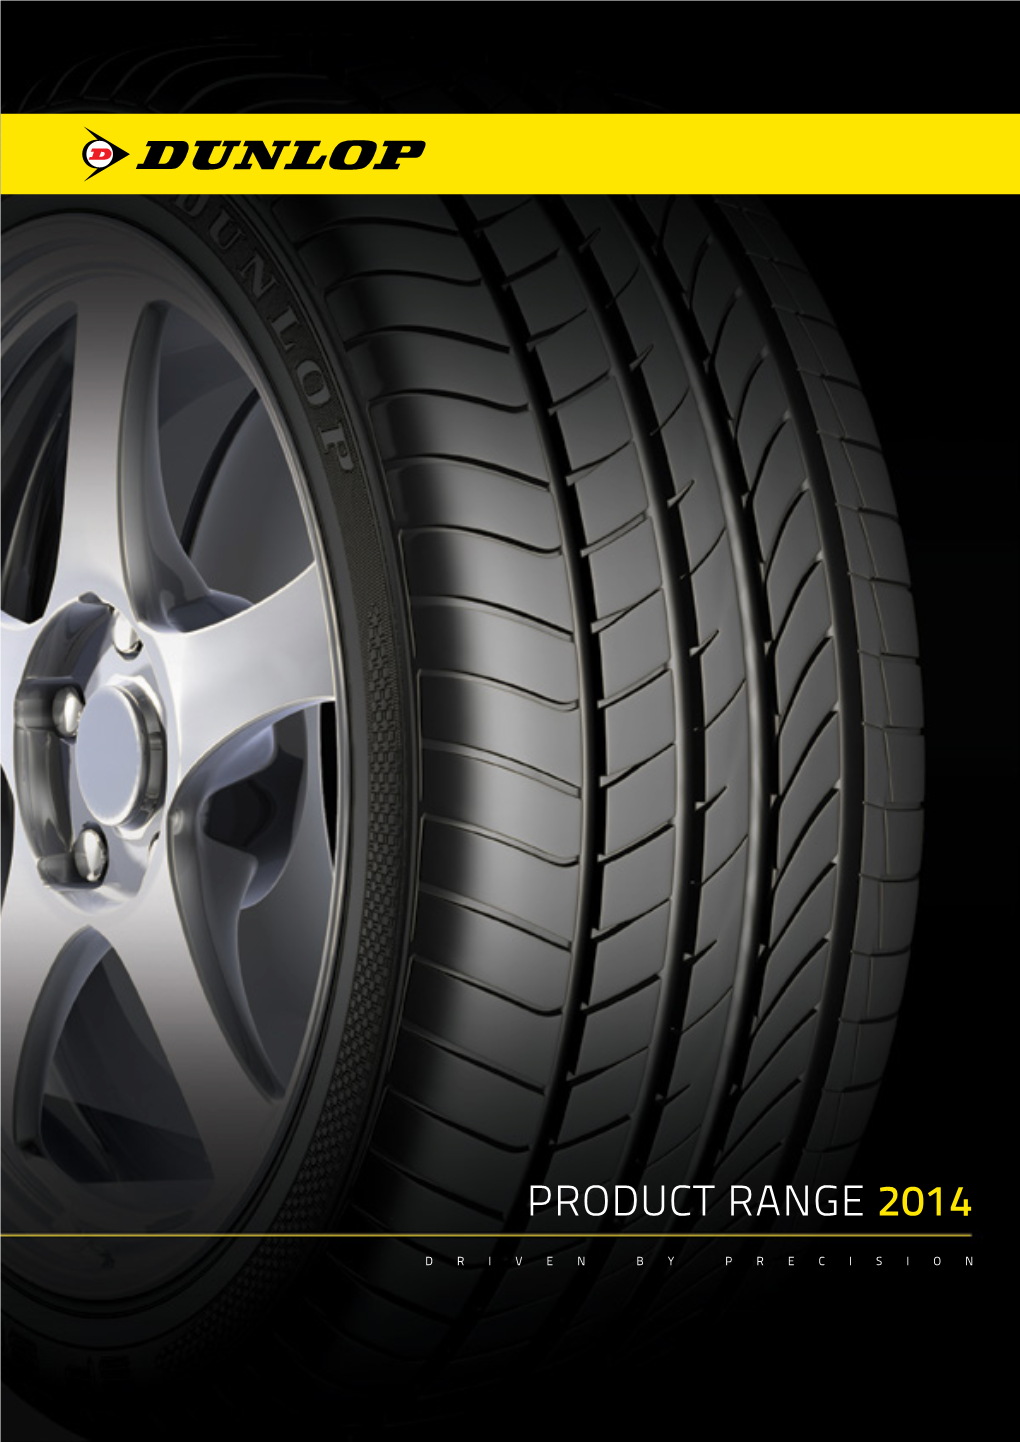 Product Range 20142014 Contents